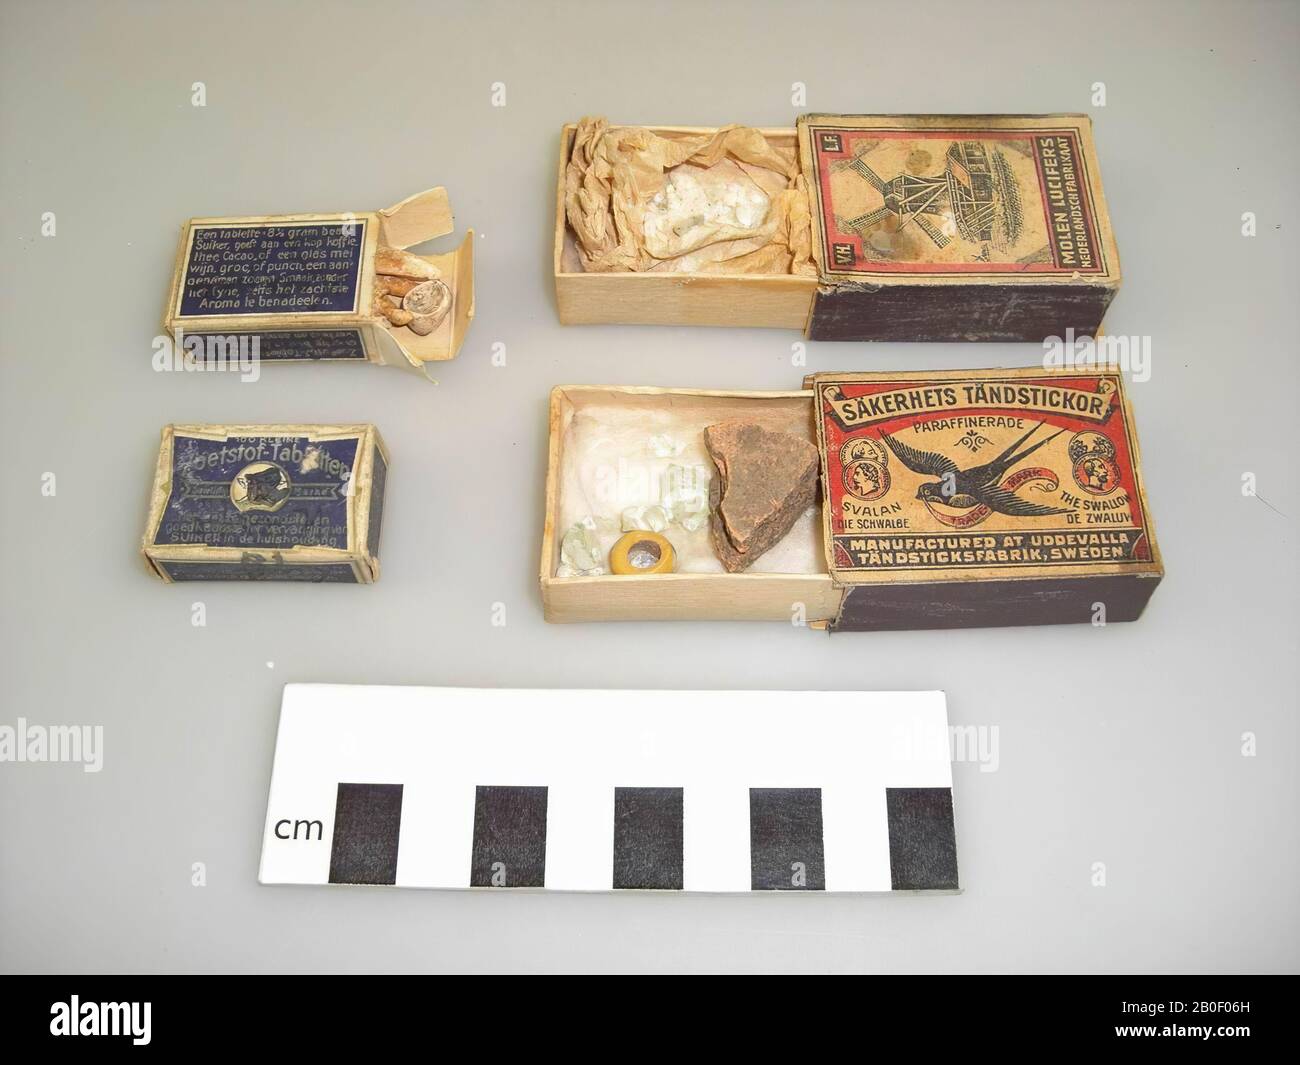 In Säkerhets tändstickor box, bead, glass, prehistory, Ukraine Stock Photo